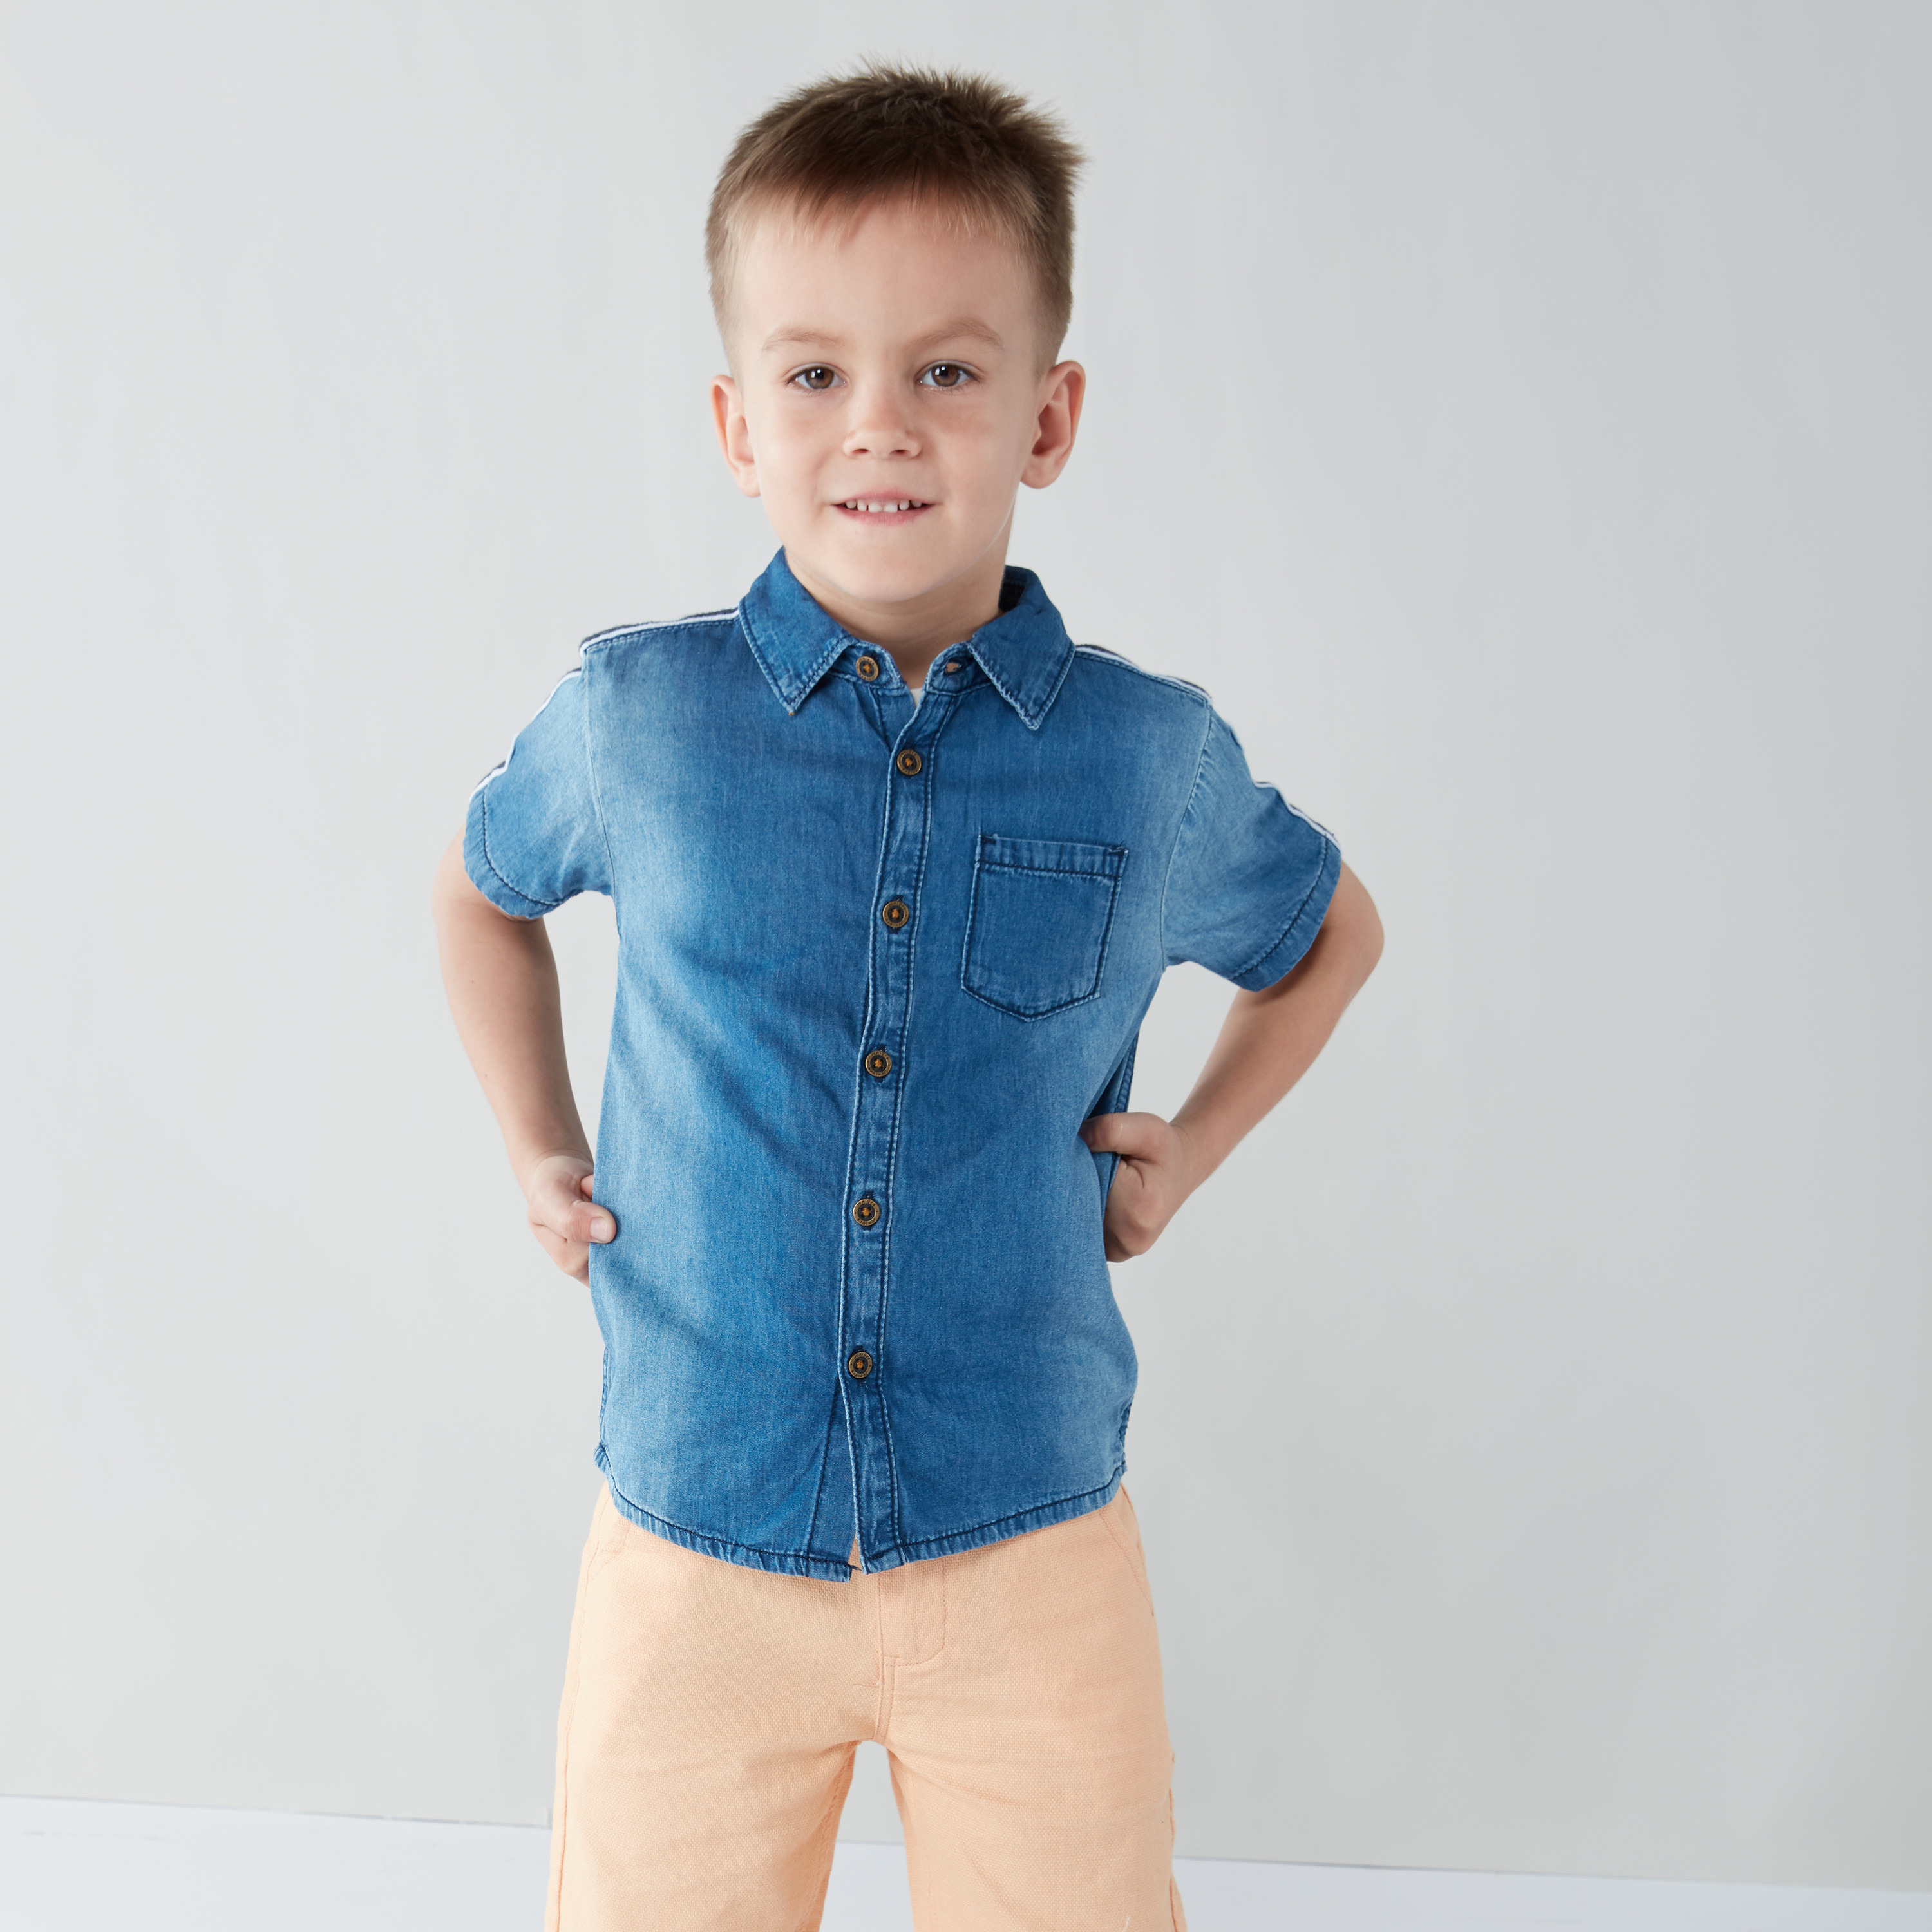 Baby Boys Short Sleeve Shirt Summer Pattern Print Top Blouse Casualwear T- shirt | eBay